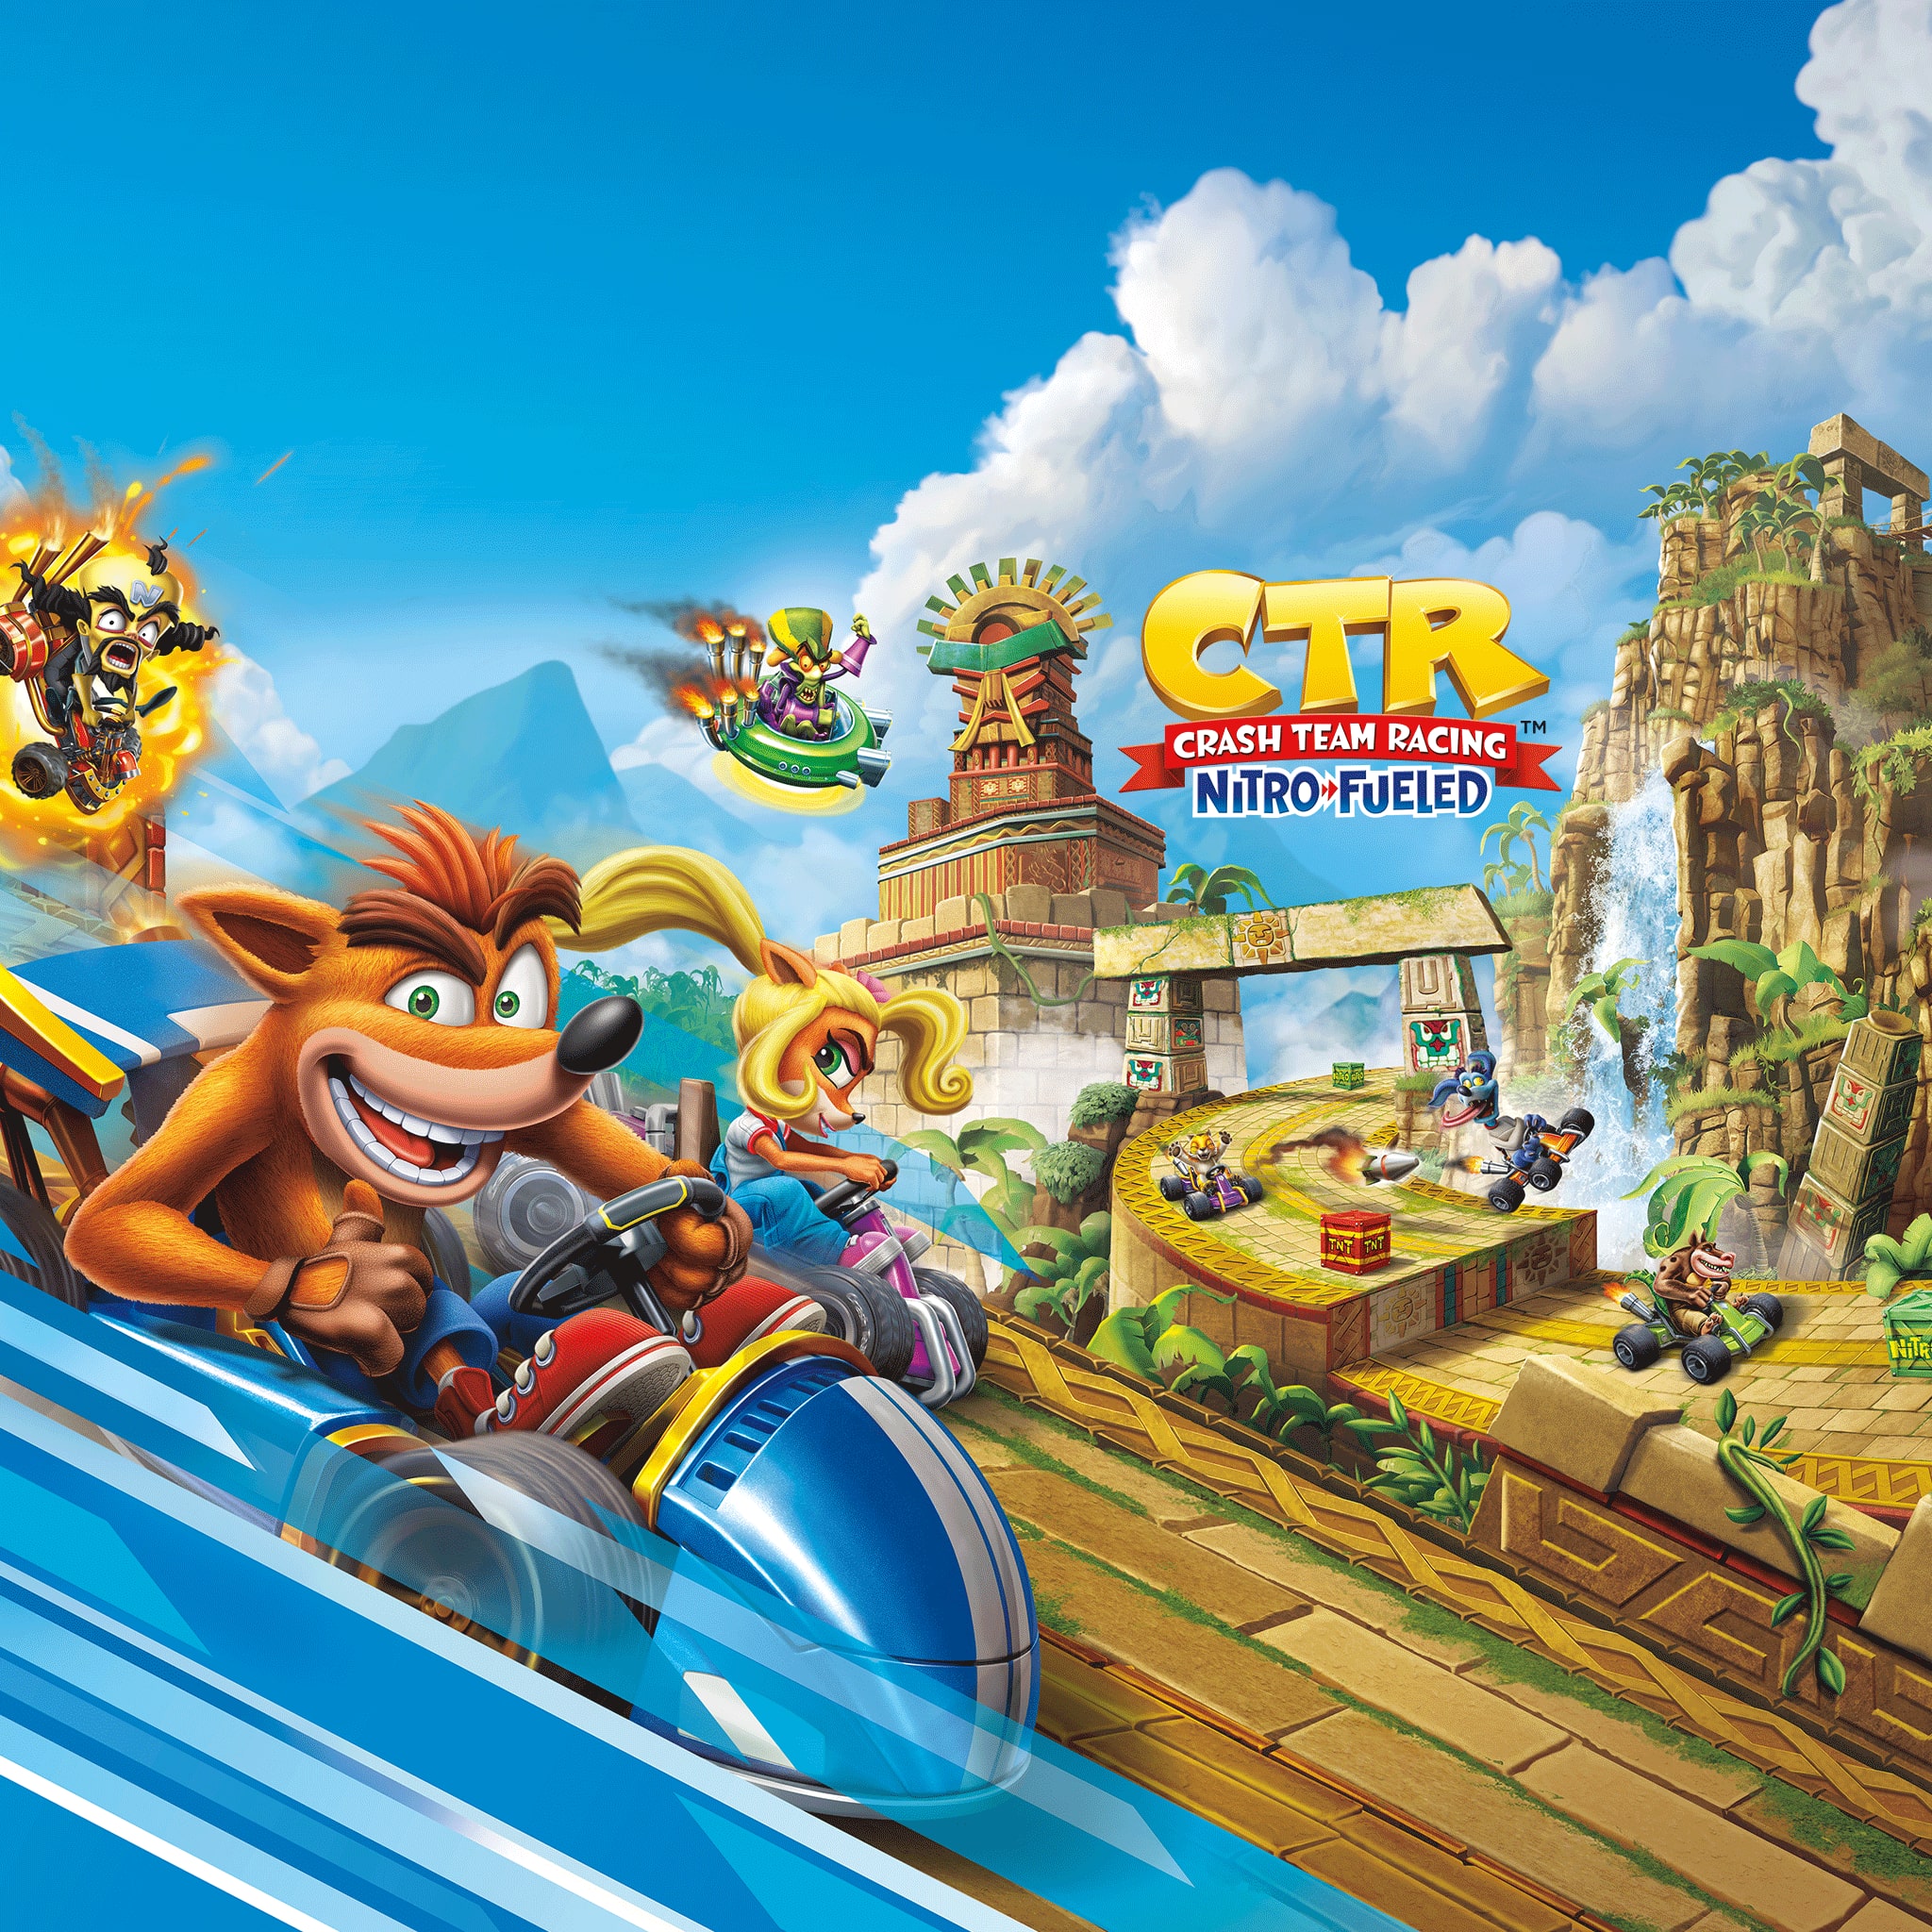 dommer Fantasi sorg Crash Team Racing Nitro-Fueled - PS4 Games | PlayStation (UK)